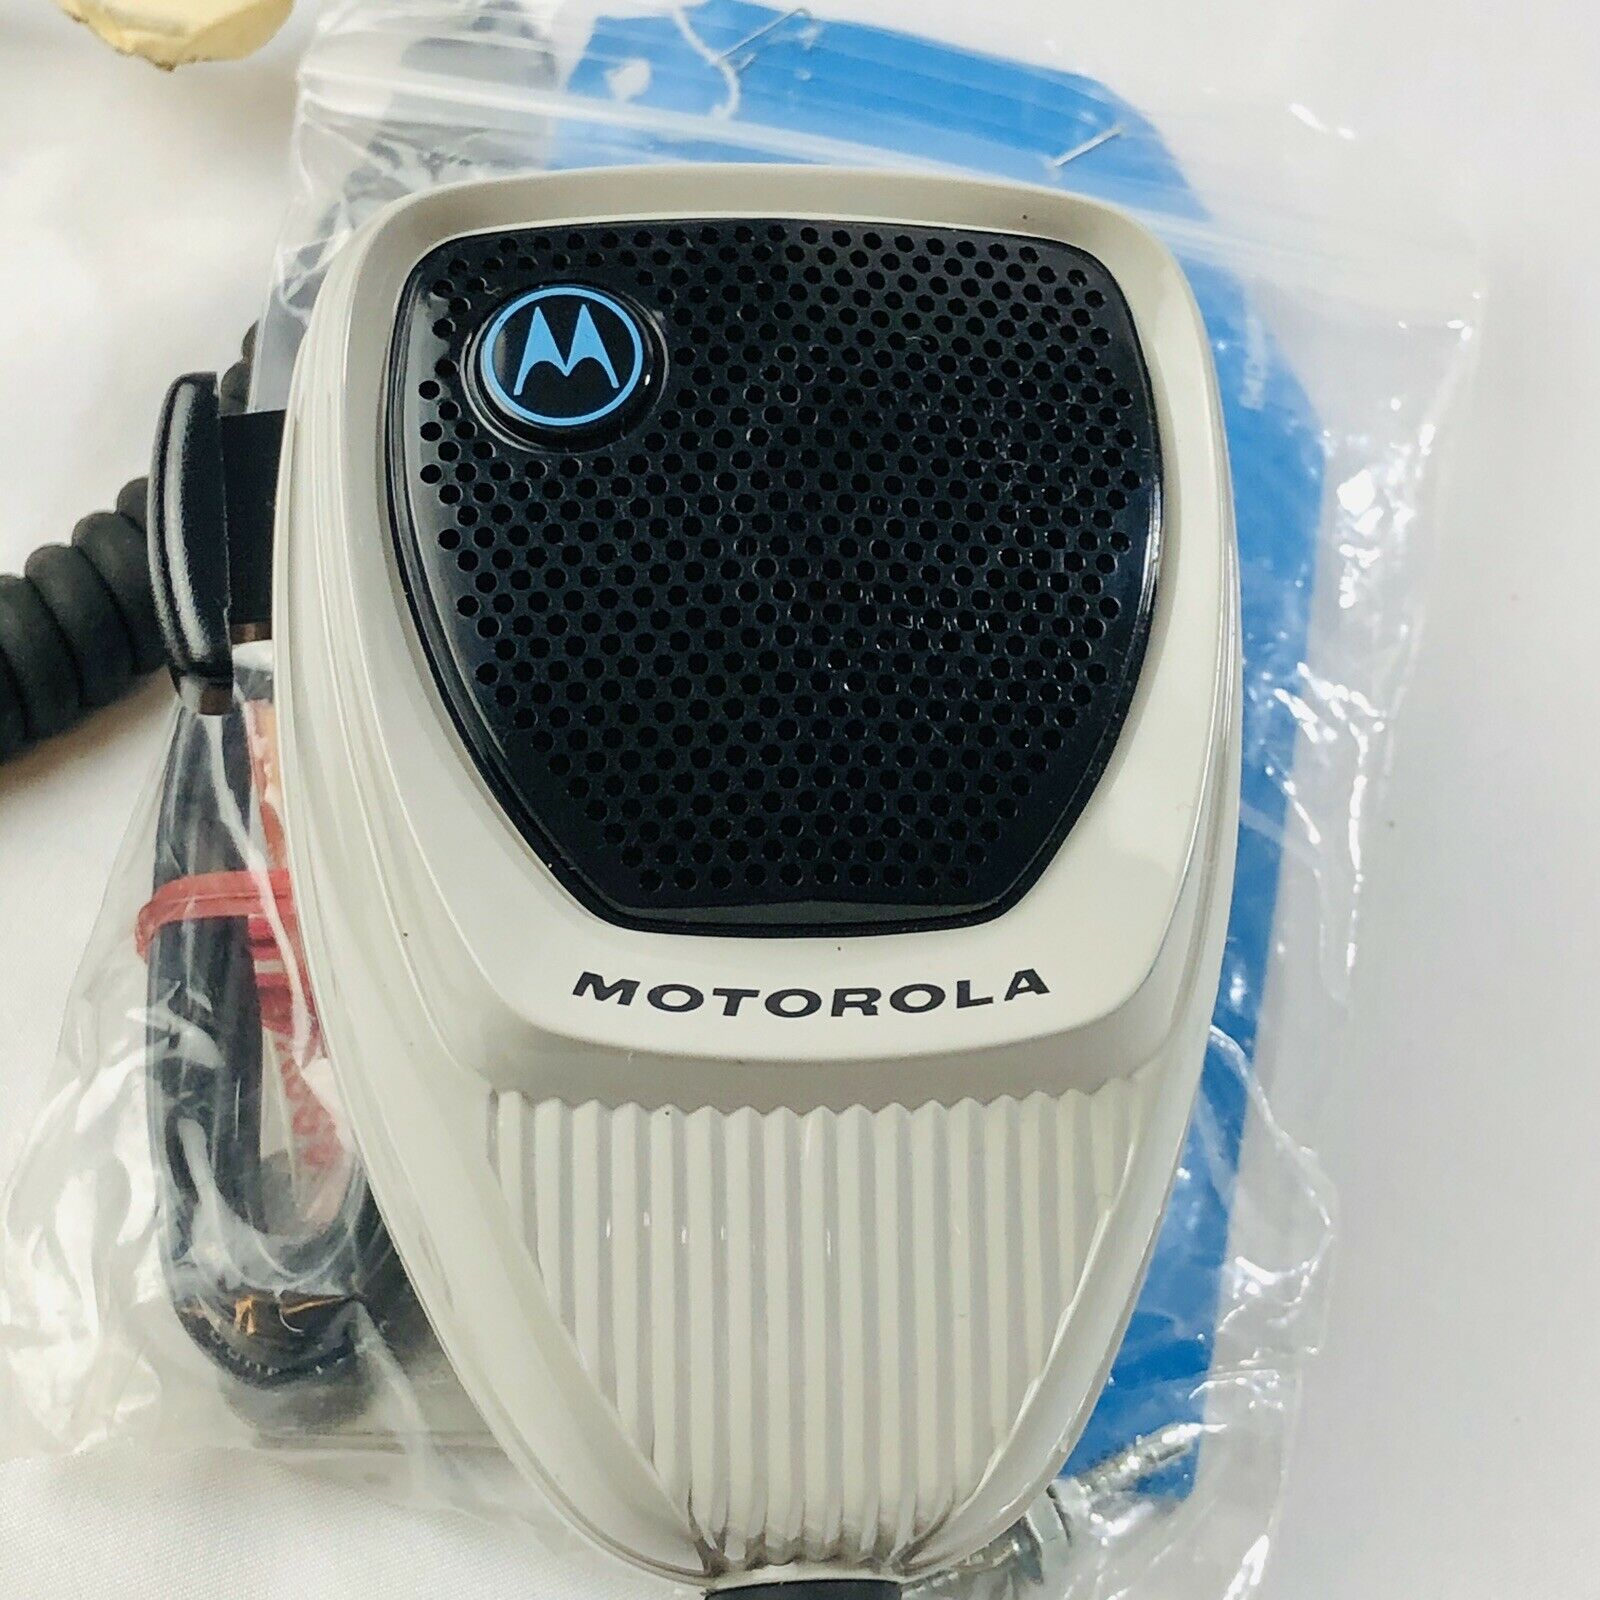 Motorola Mobile Radio Hmn1080a Microphone New Old Stock